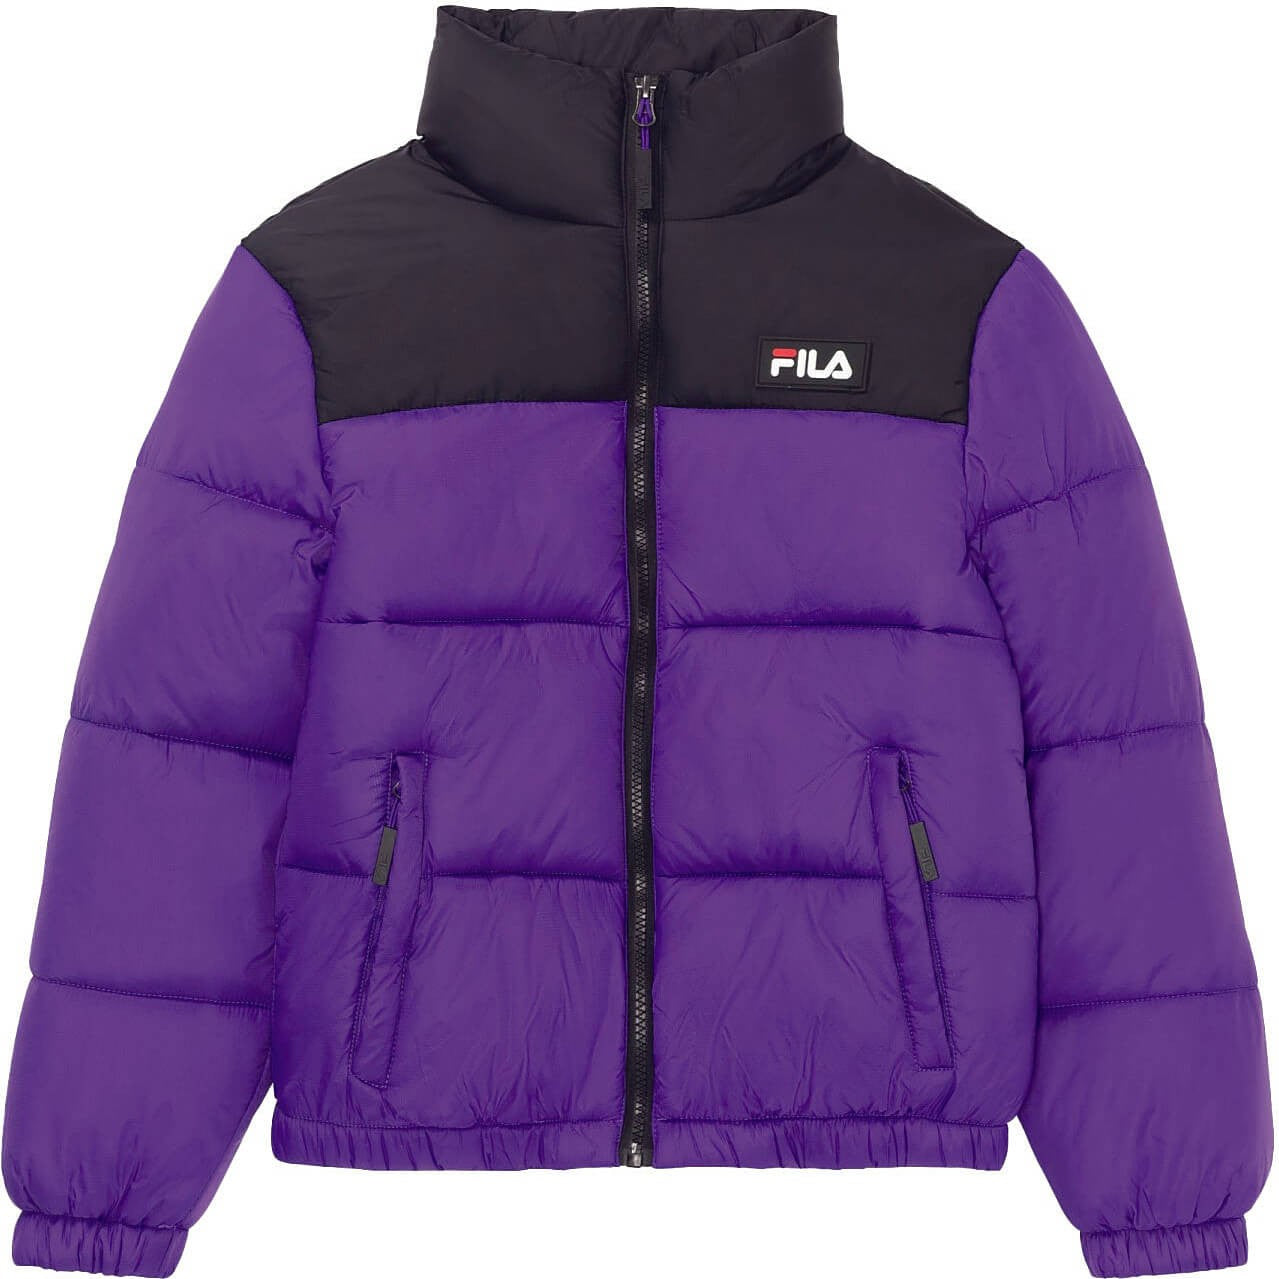 Fila SANDIA puff jacket Ultra Violet-Black